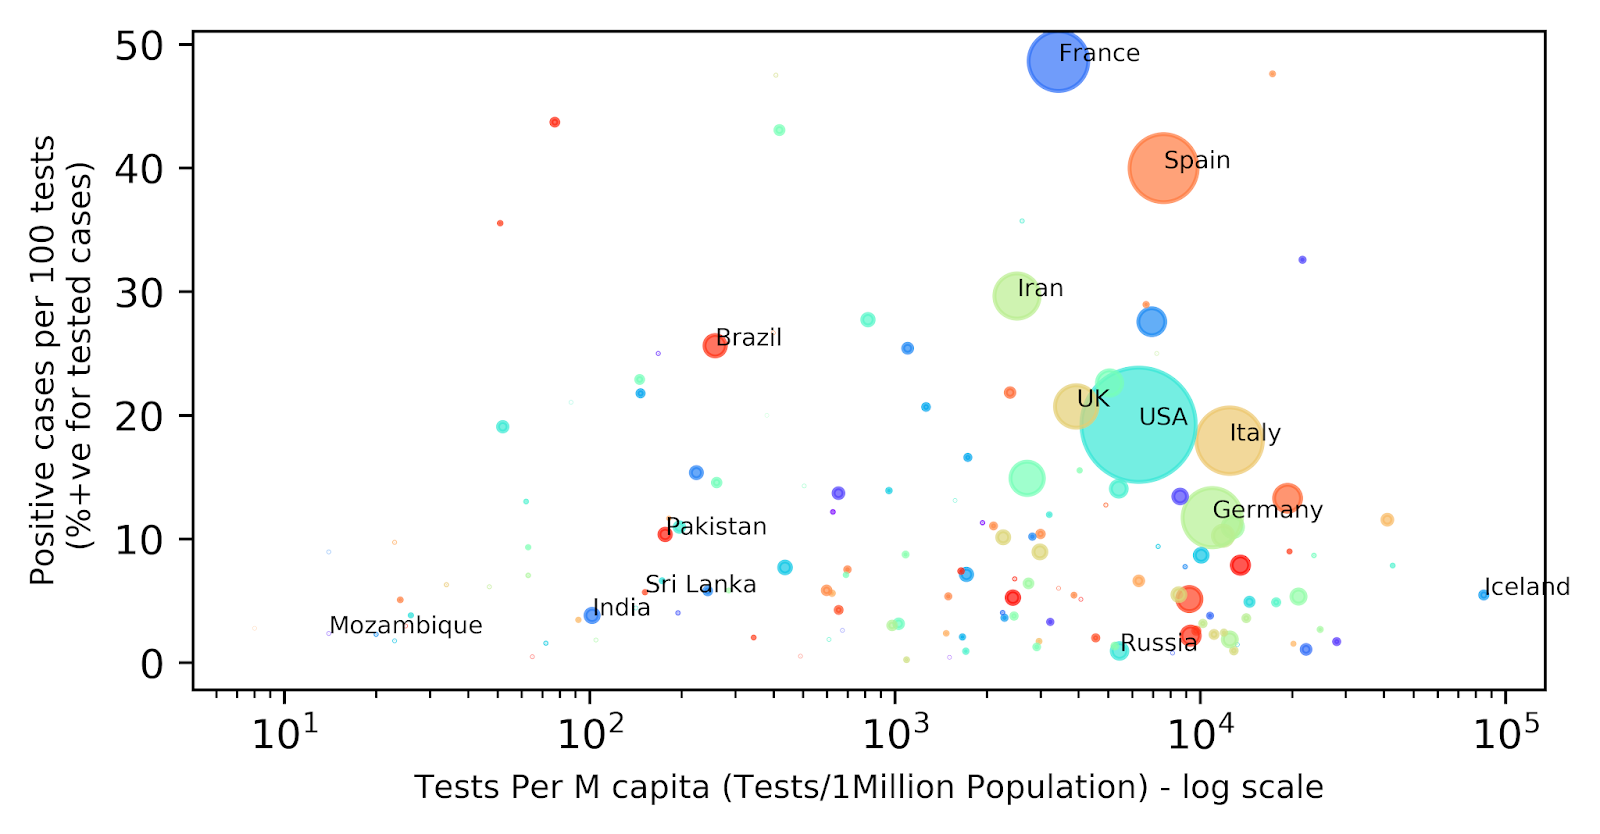 image for Test per million capita Vs Percentage positive cases COVID testing